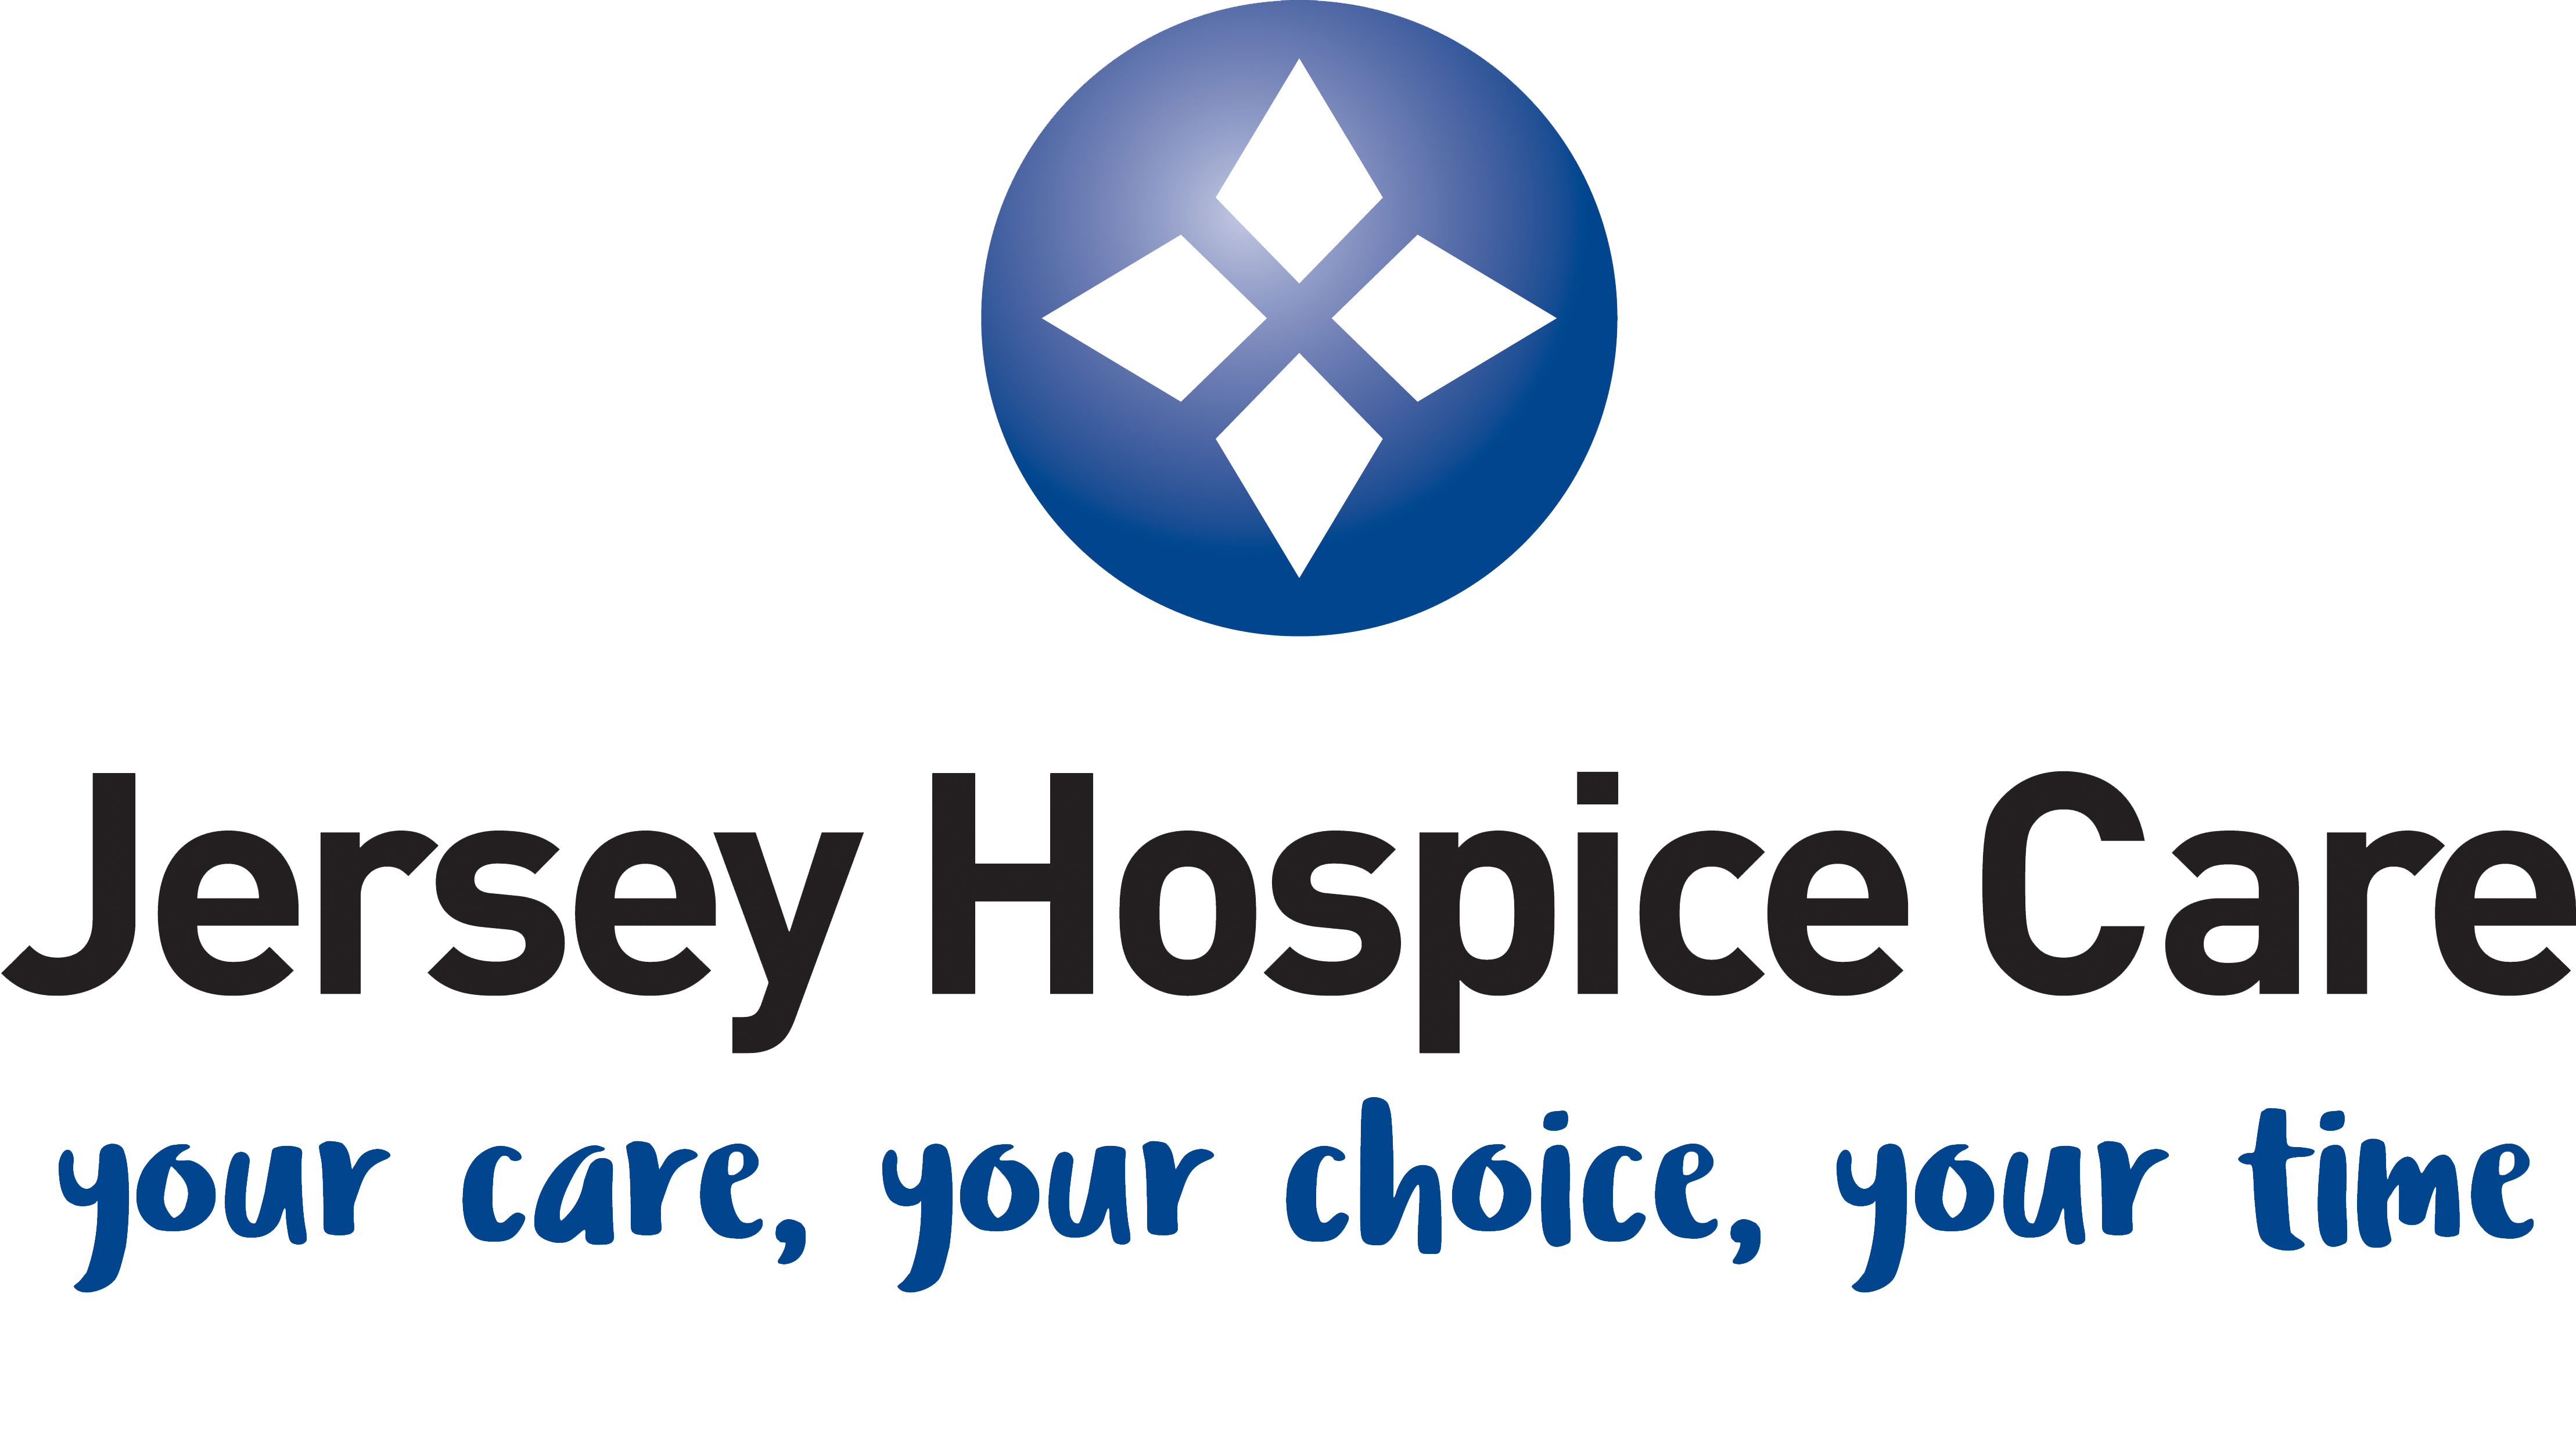 Jersey Hospice Care